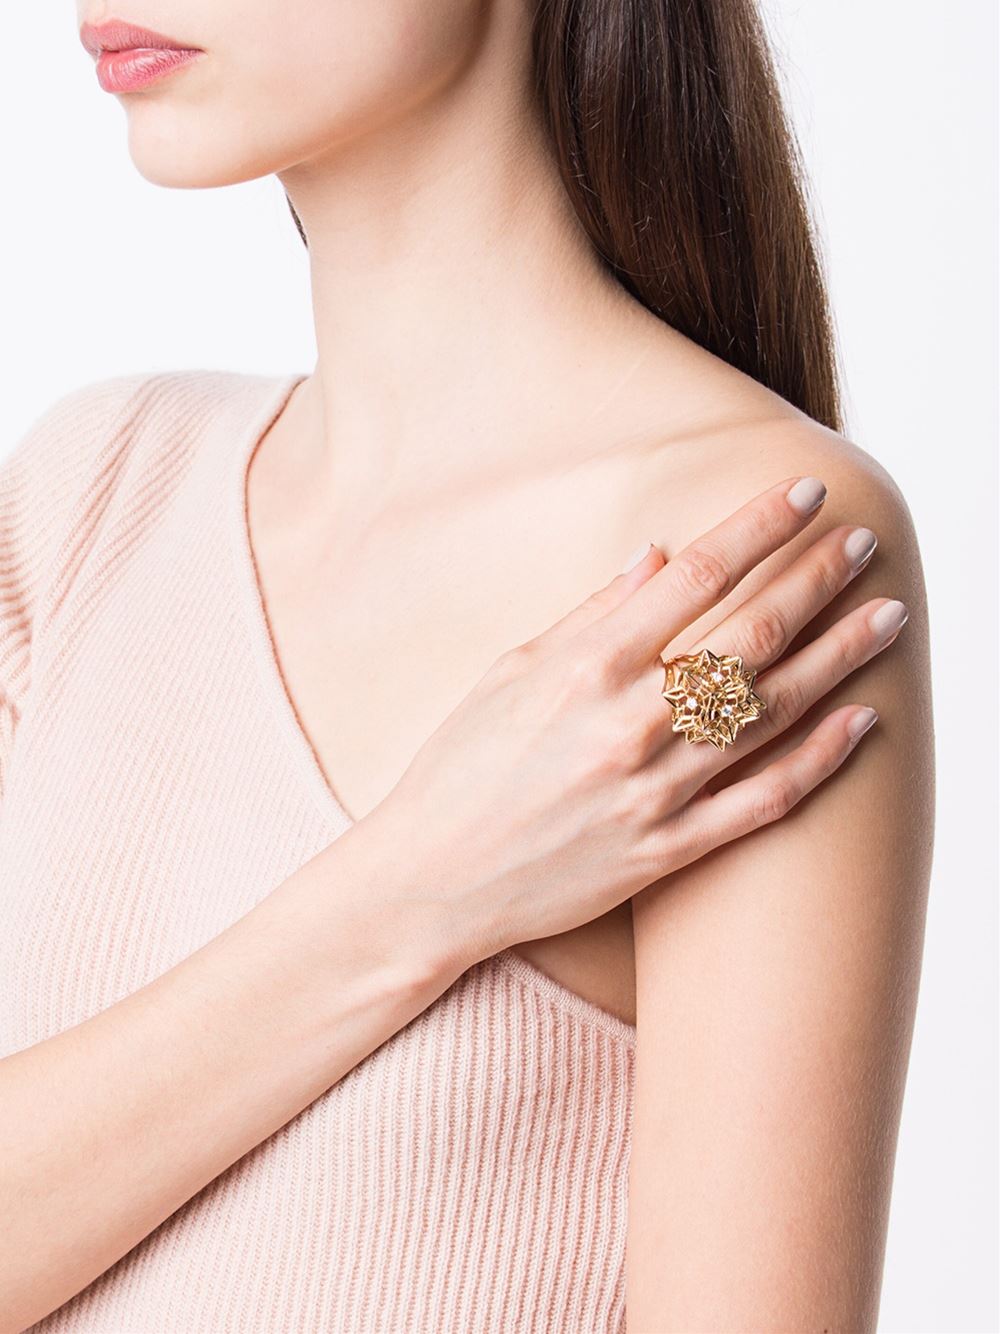 R002 Genuine 9ct,14K or 18K Gold Grecian-Key Versace motif WIDE Band Dress  Ring | eBay